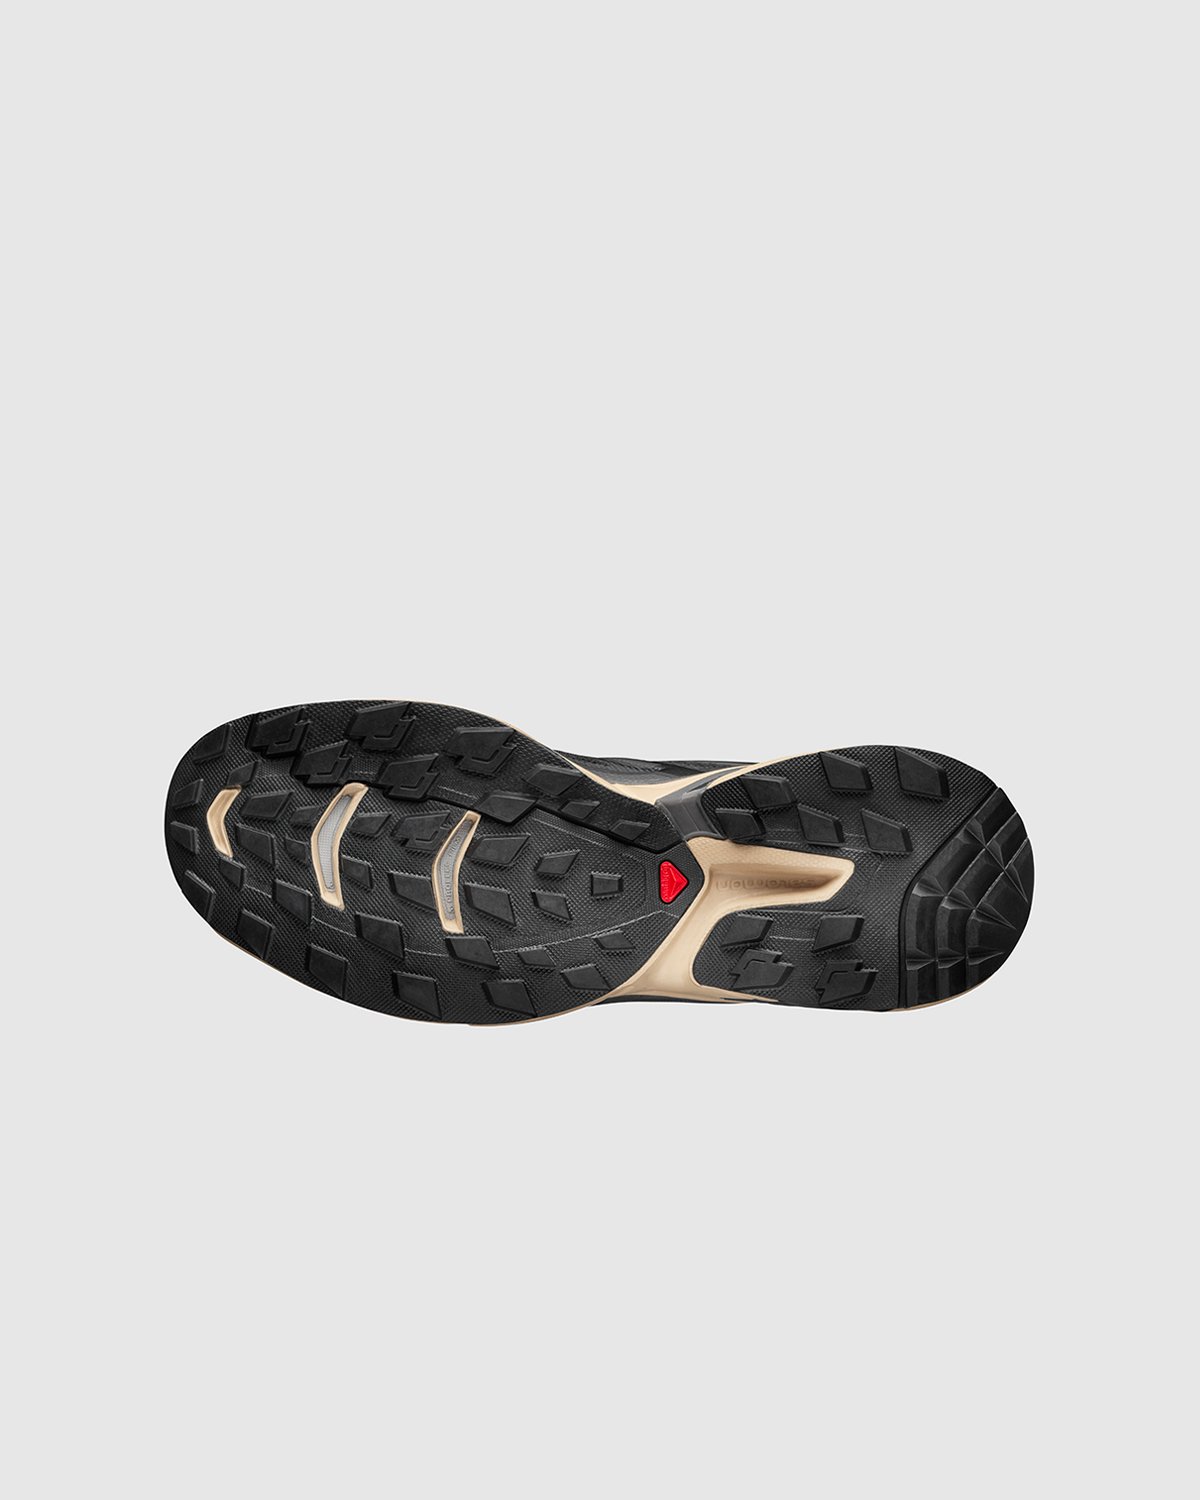 Salomon - XT-WINGS 2 ADVANCED Black/Safari/Magnet - Footwear - Black - Image 5